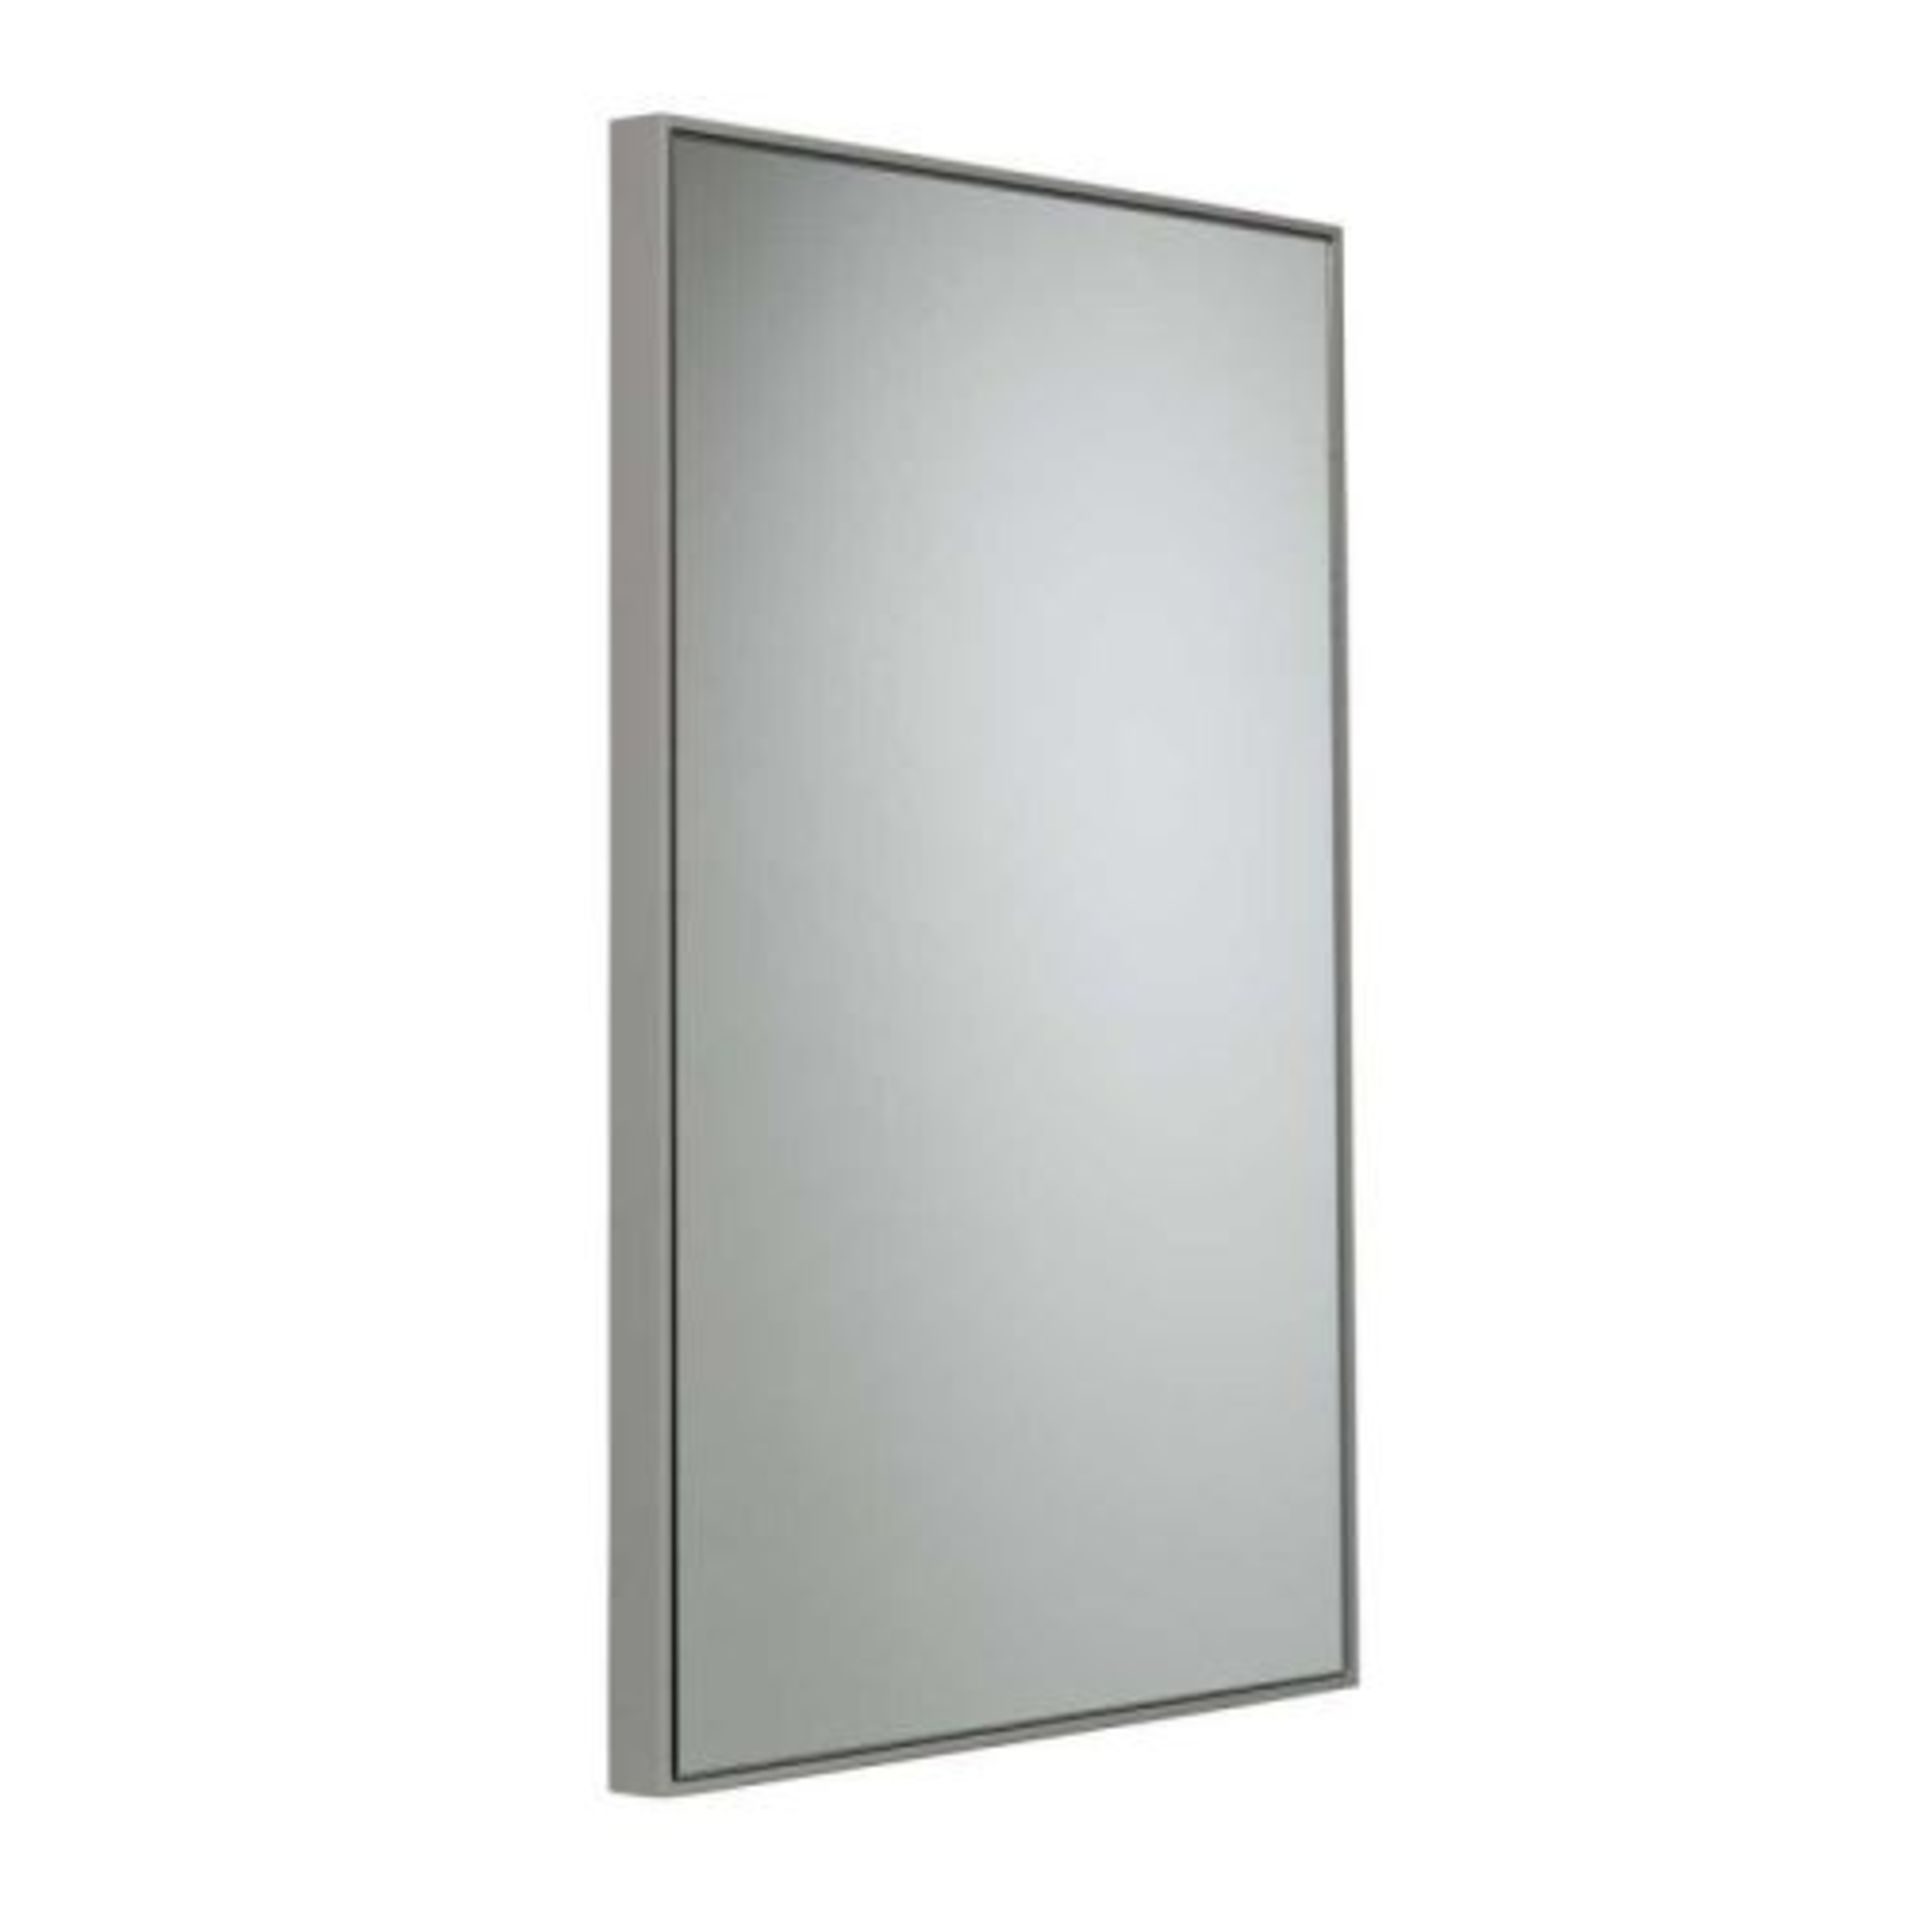 R2 Bathrooms Modular AM5050.LG Framed Mirror - Light Grey - Image 3 of 9